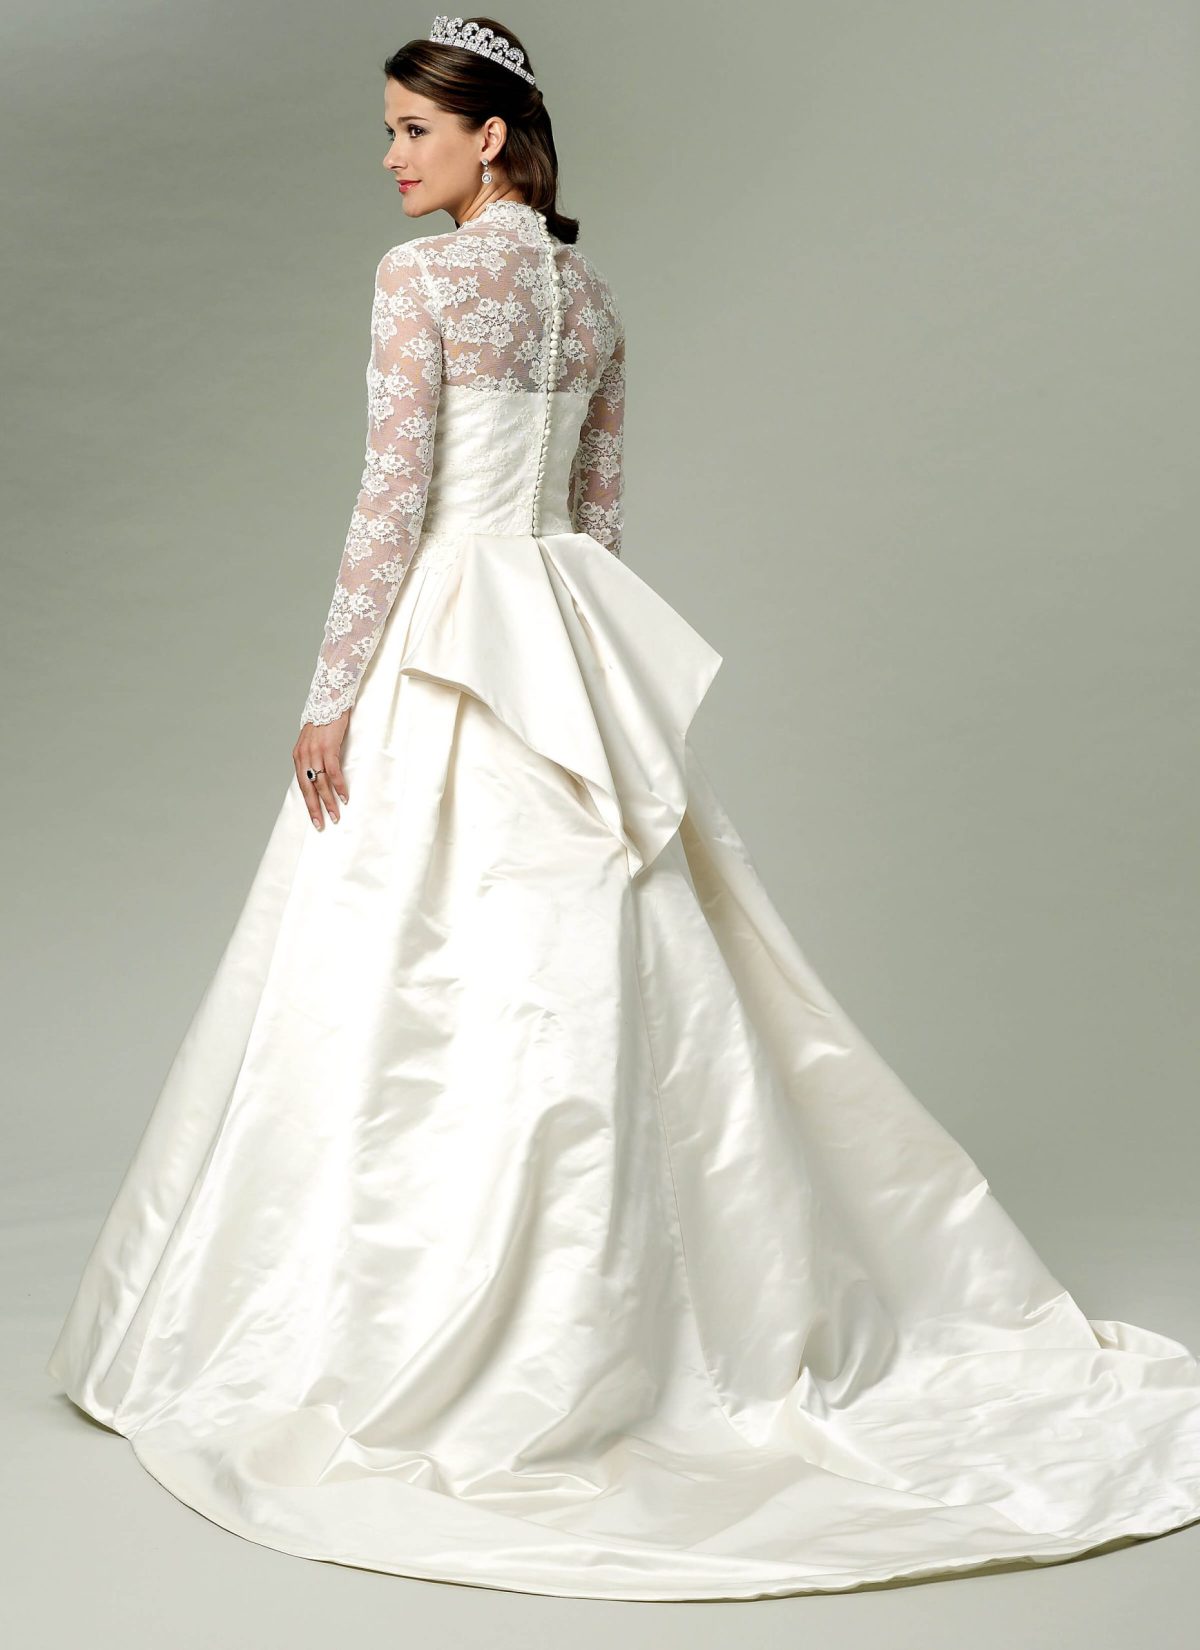 Butterick Sewing Pattern B5731 Misses' Bridal Dress